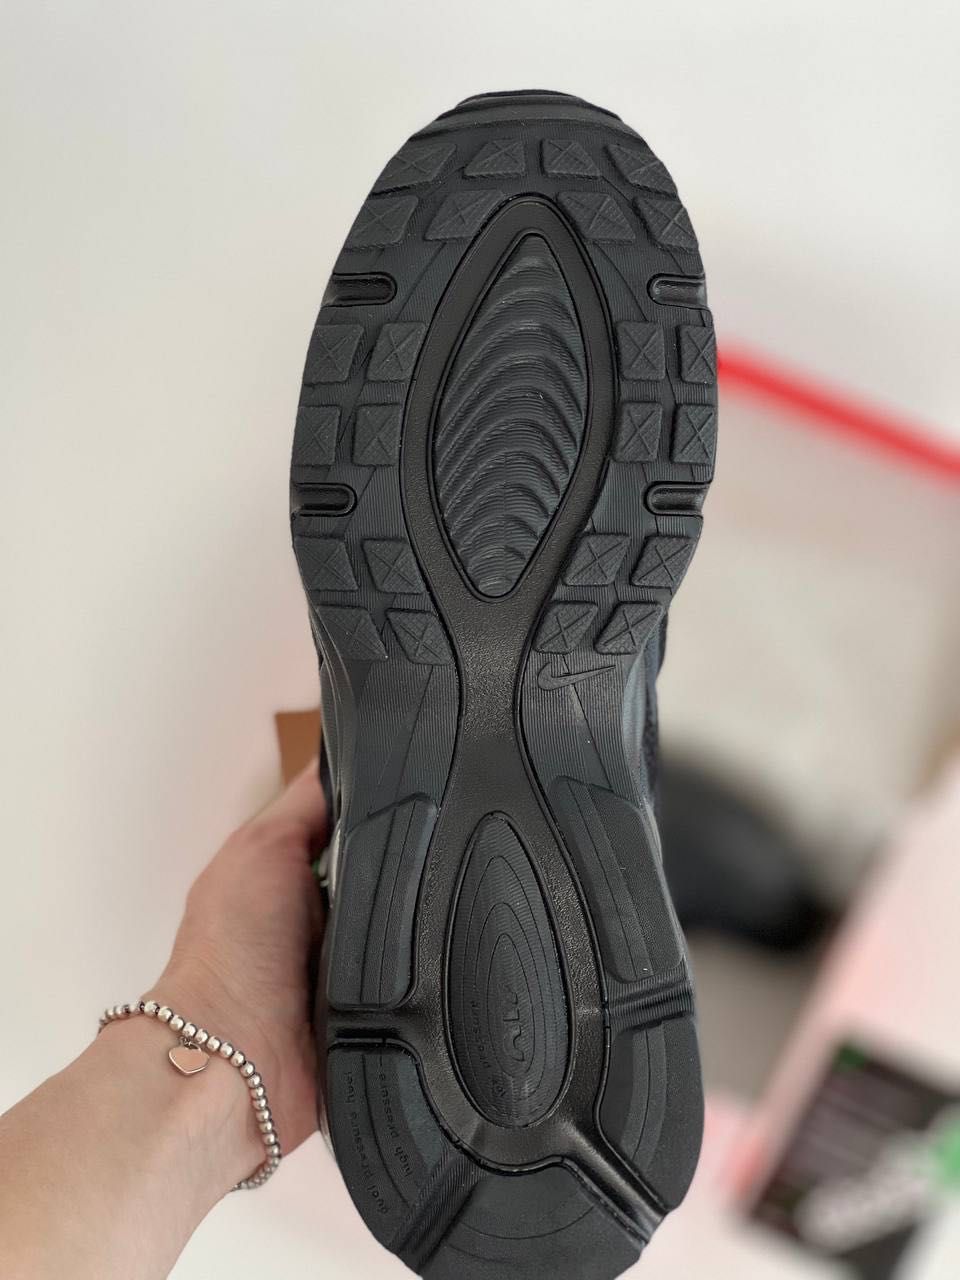 Мужские кроссовки Nike Air Max TW Black. Размеры 40-45